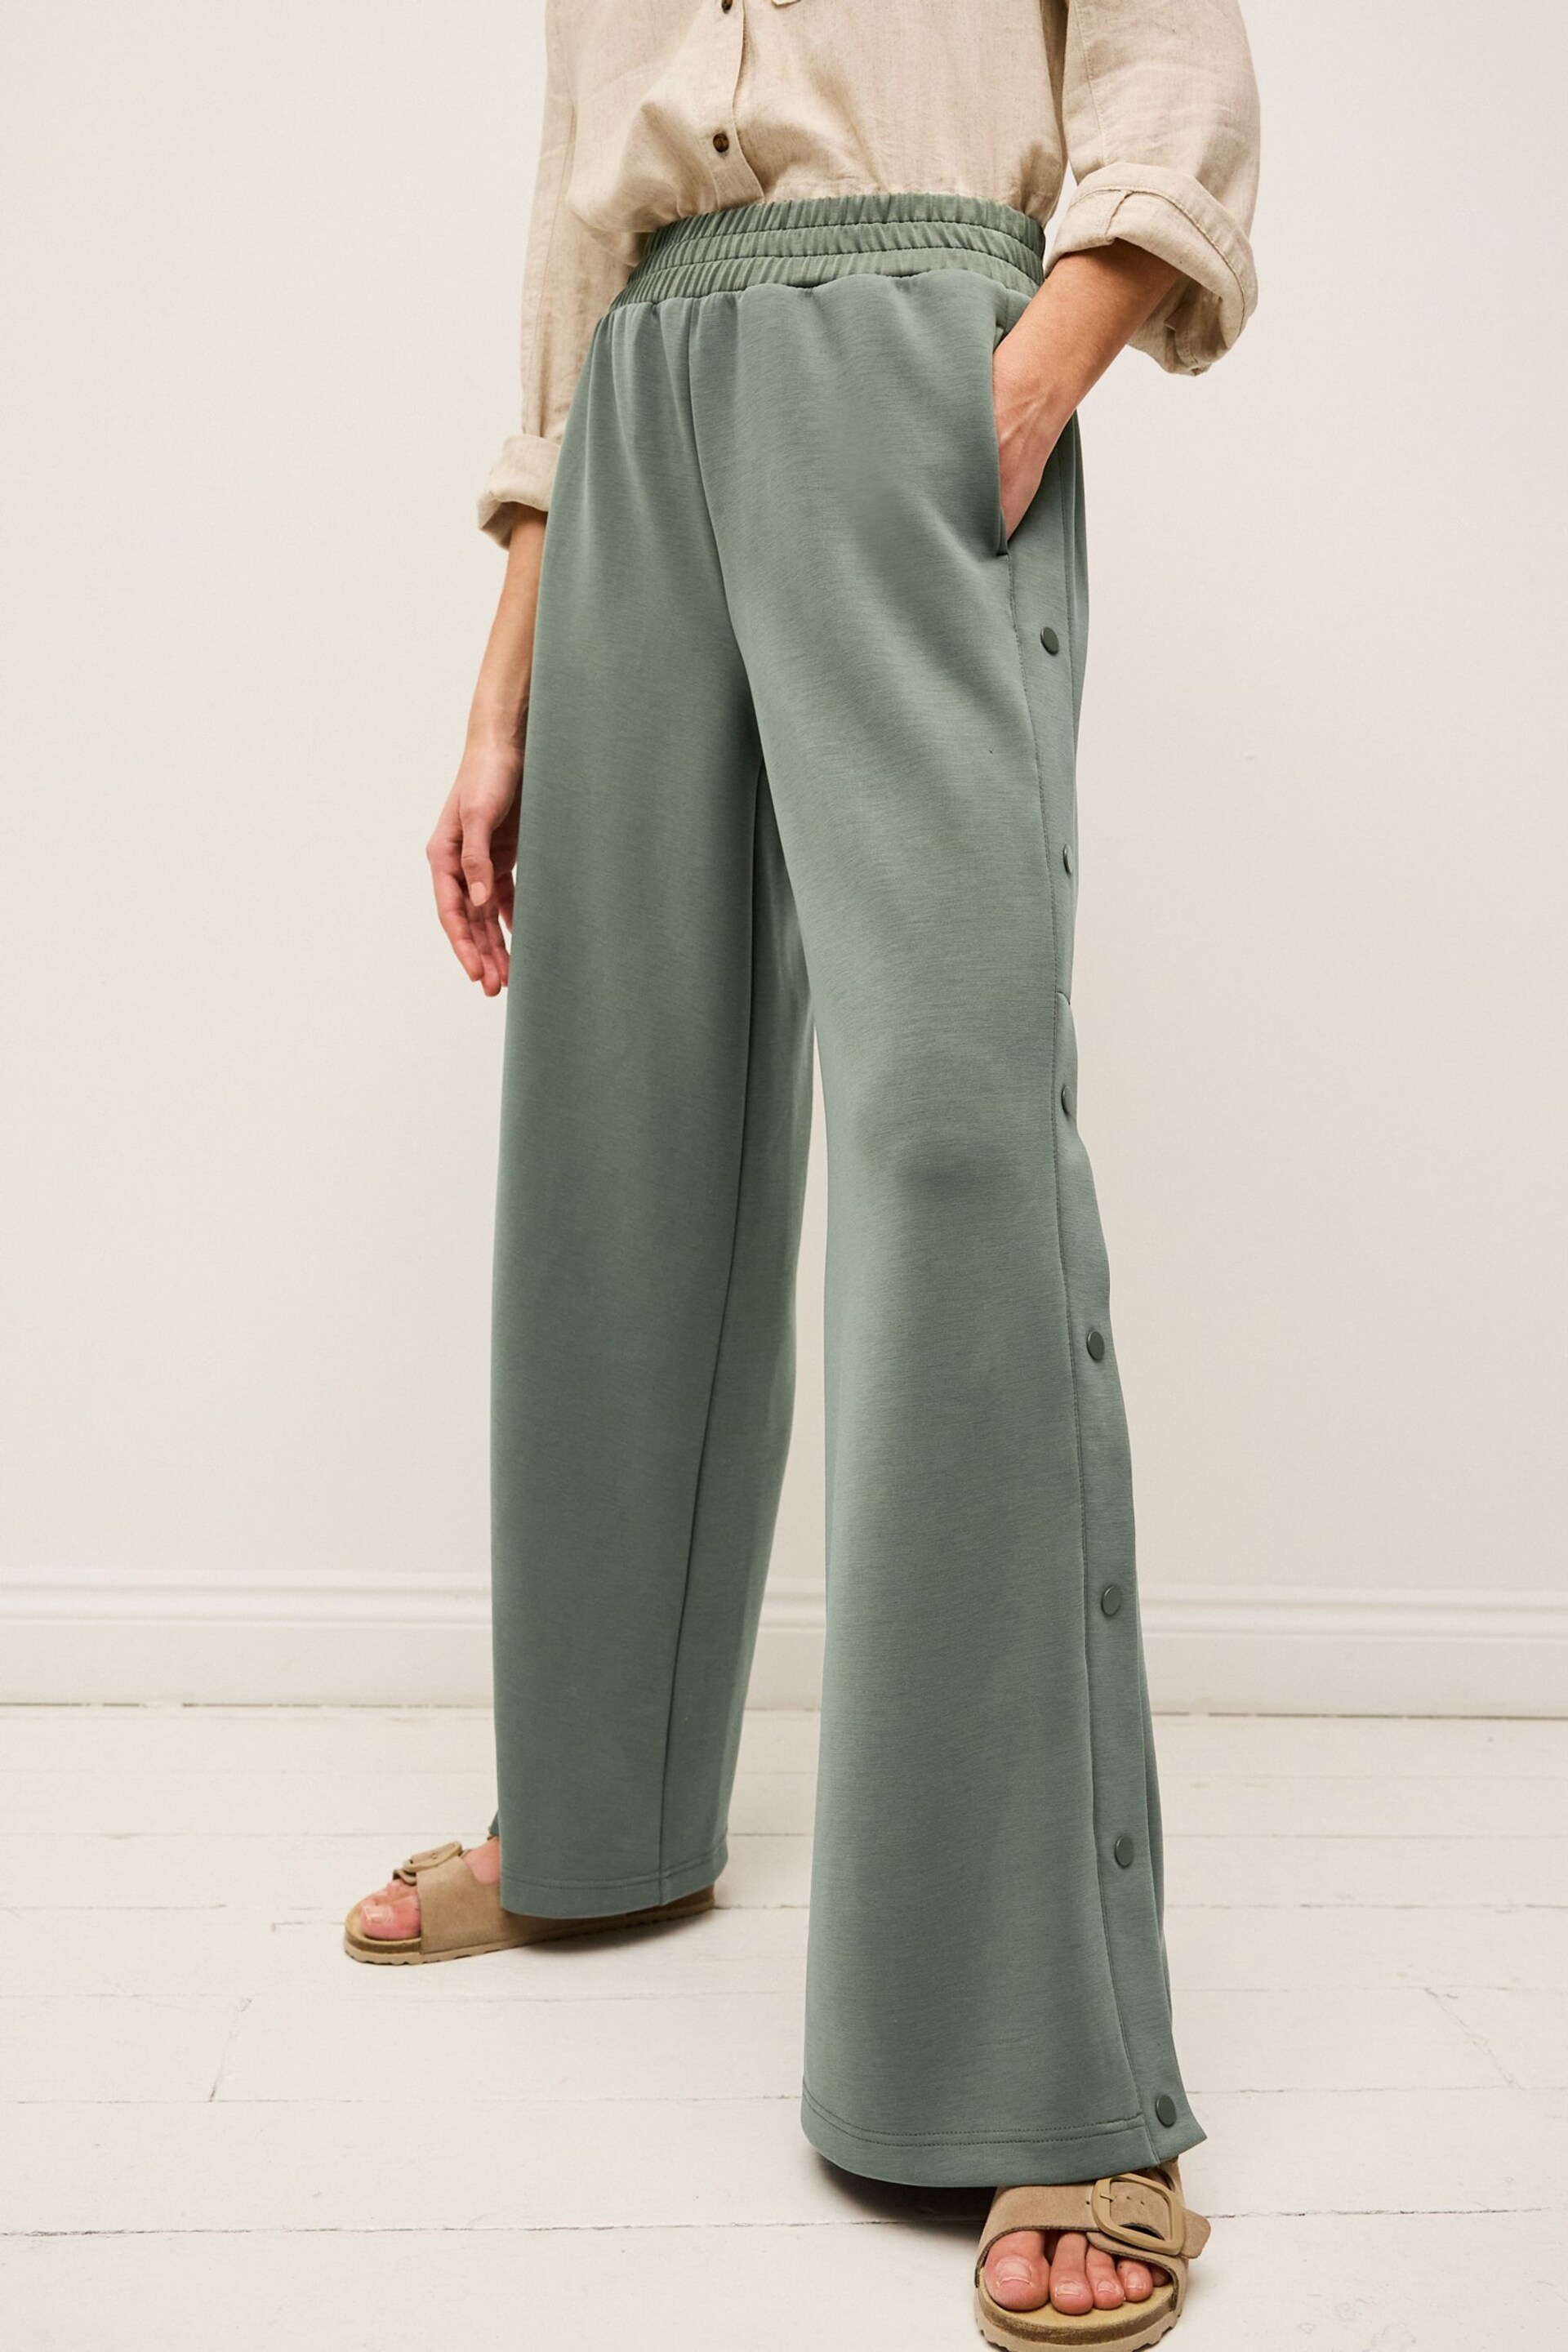 Khaki Green Soft Jersey Popper Side Trousers - Image 2 of 6